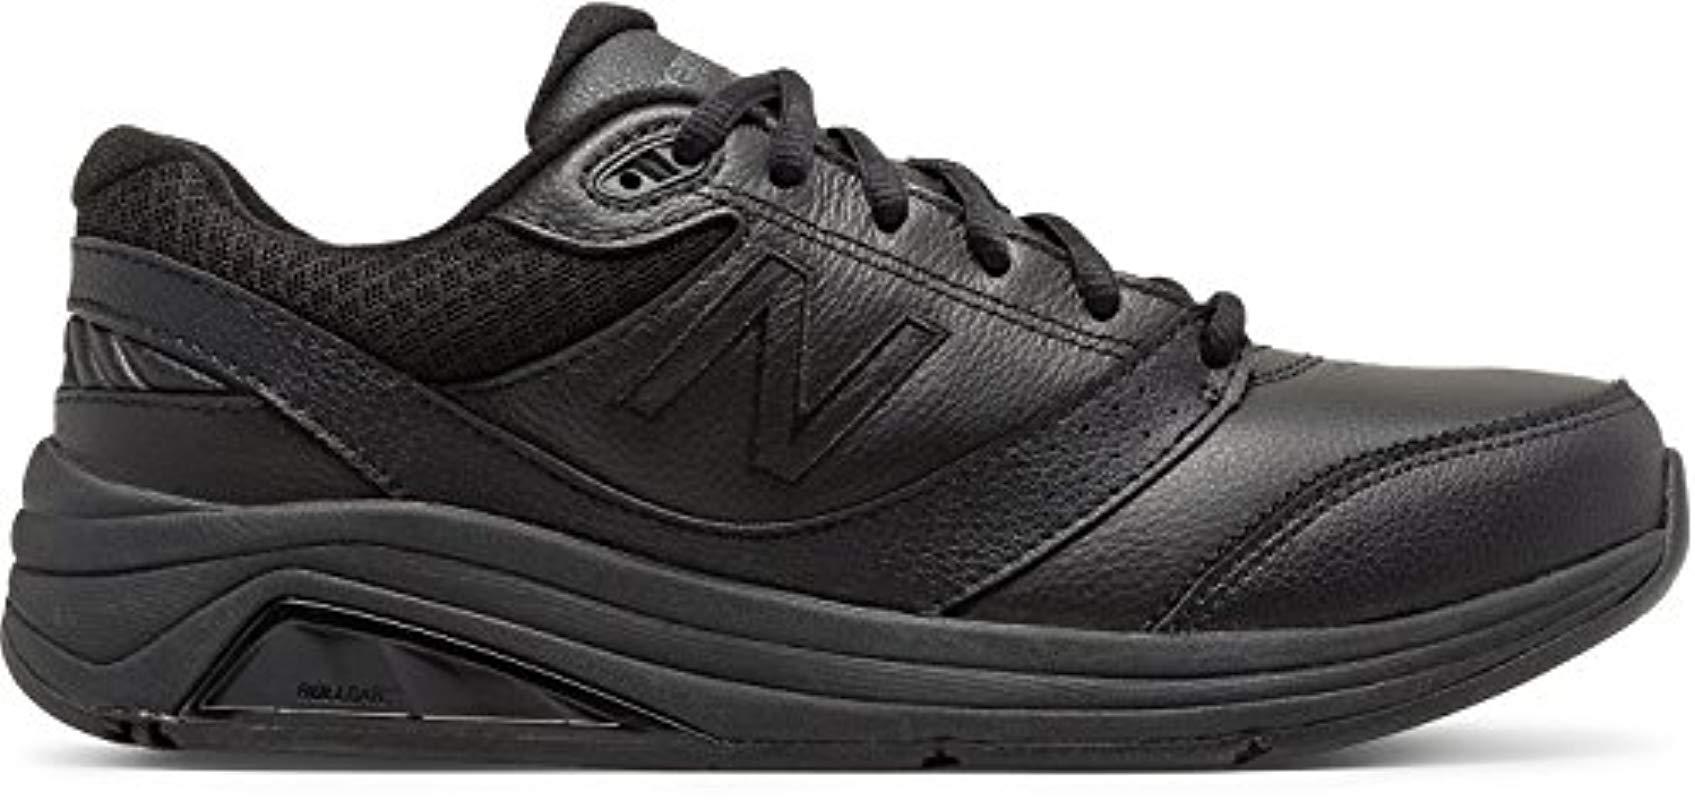 New Balance Leather S 928v3 Walking Shoe in Black/Black (Black) - Lyst